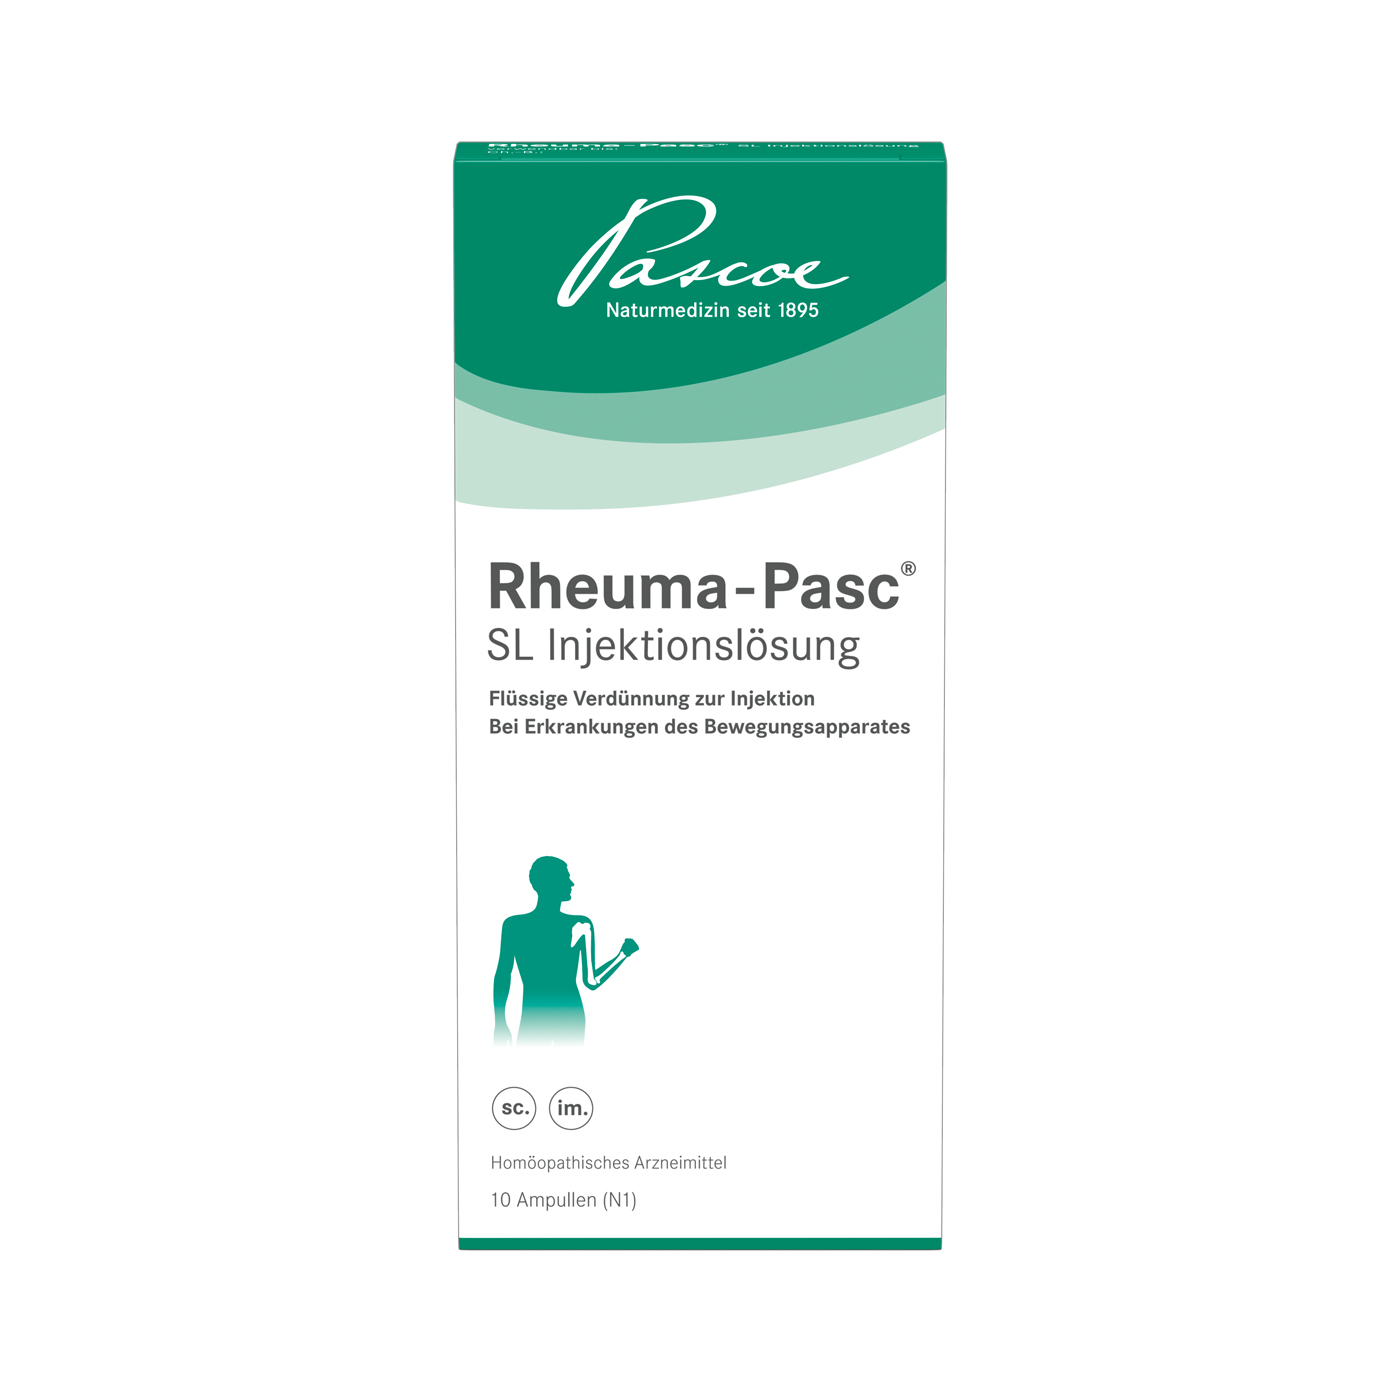 Rheuma-Pasc SL InjektionslösungRheuma-Pasc SL Injektionslösung